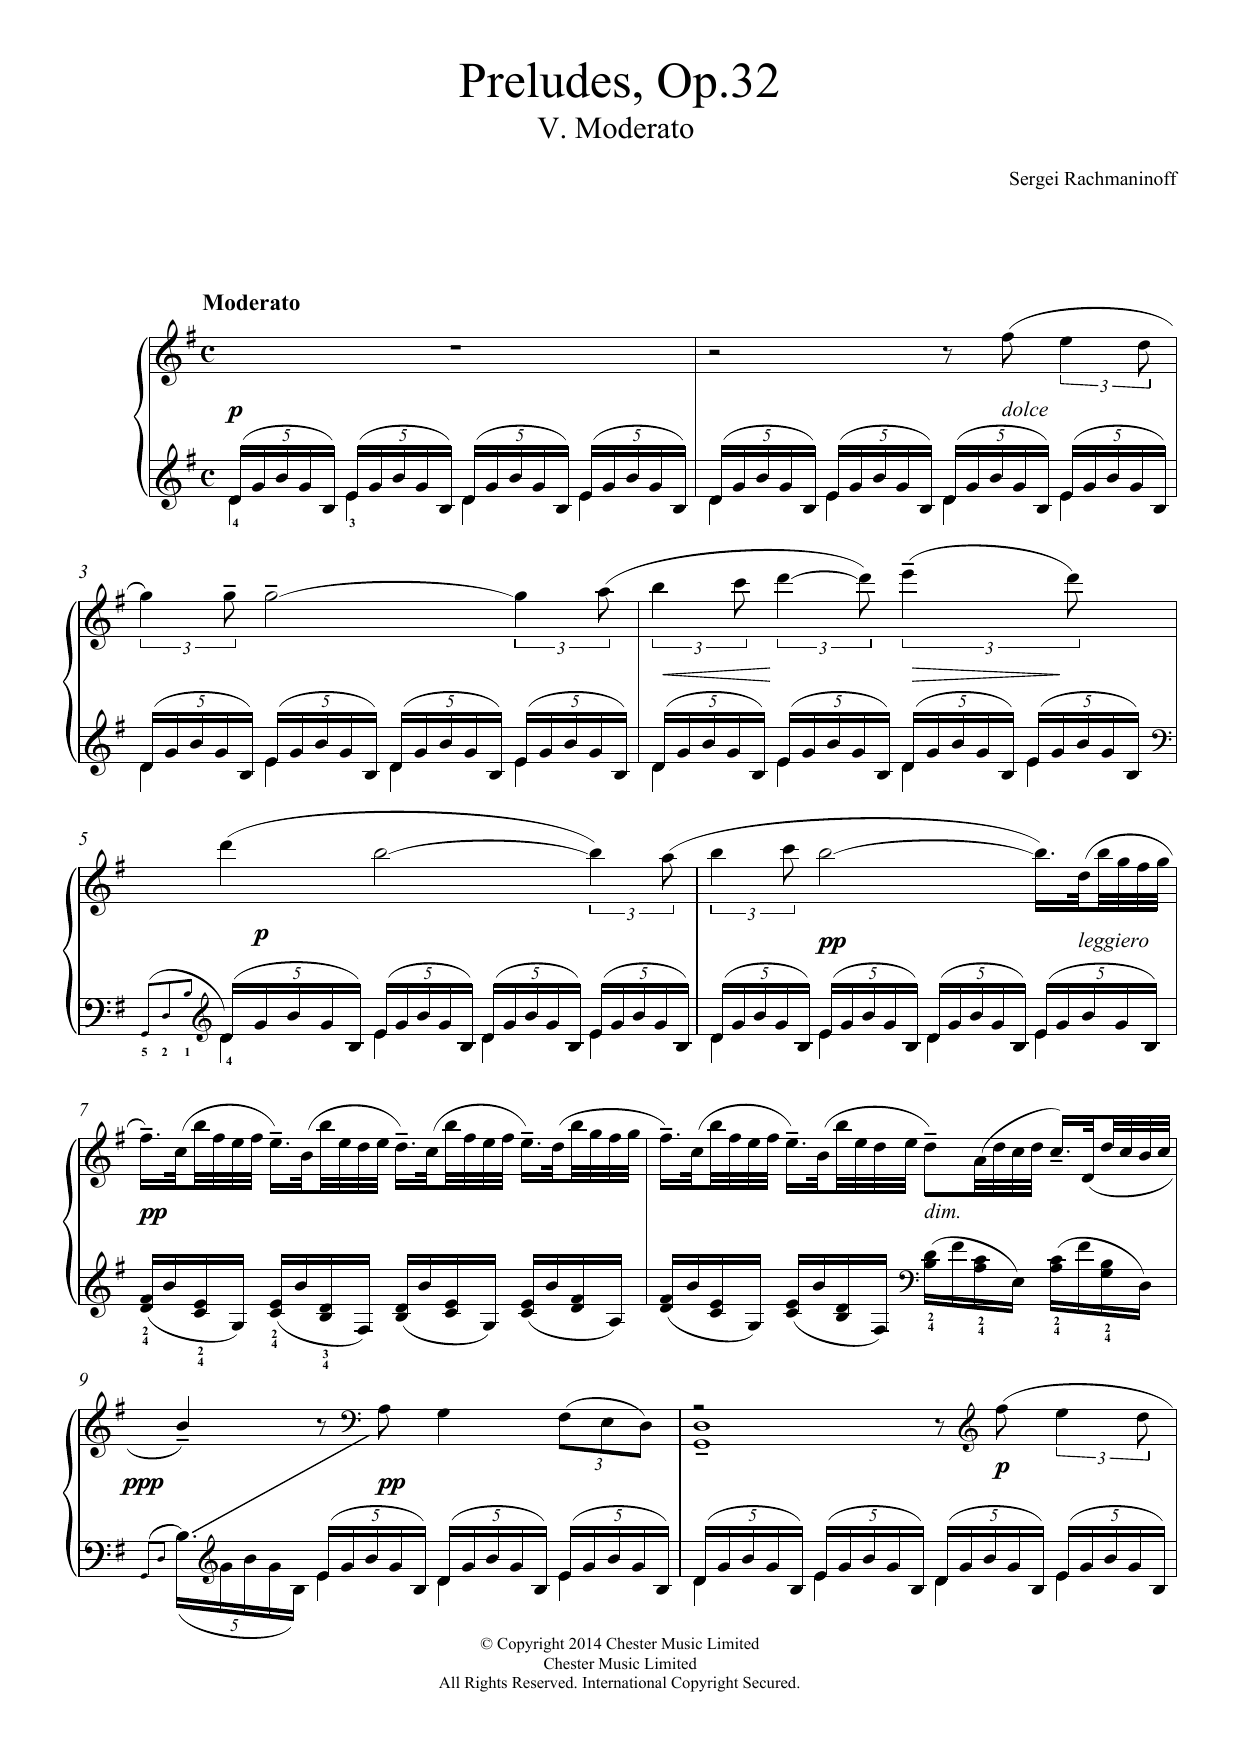 Download Sergei Rachmaninoff Preludes Op.32, No.5 Moderato Sheet Music